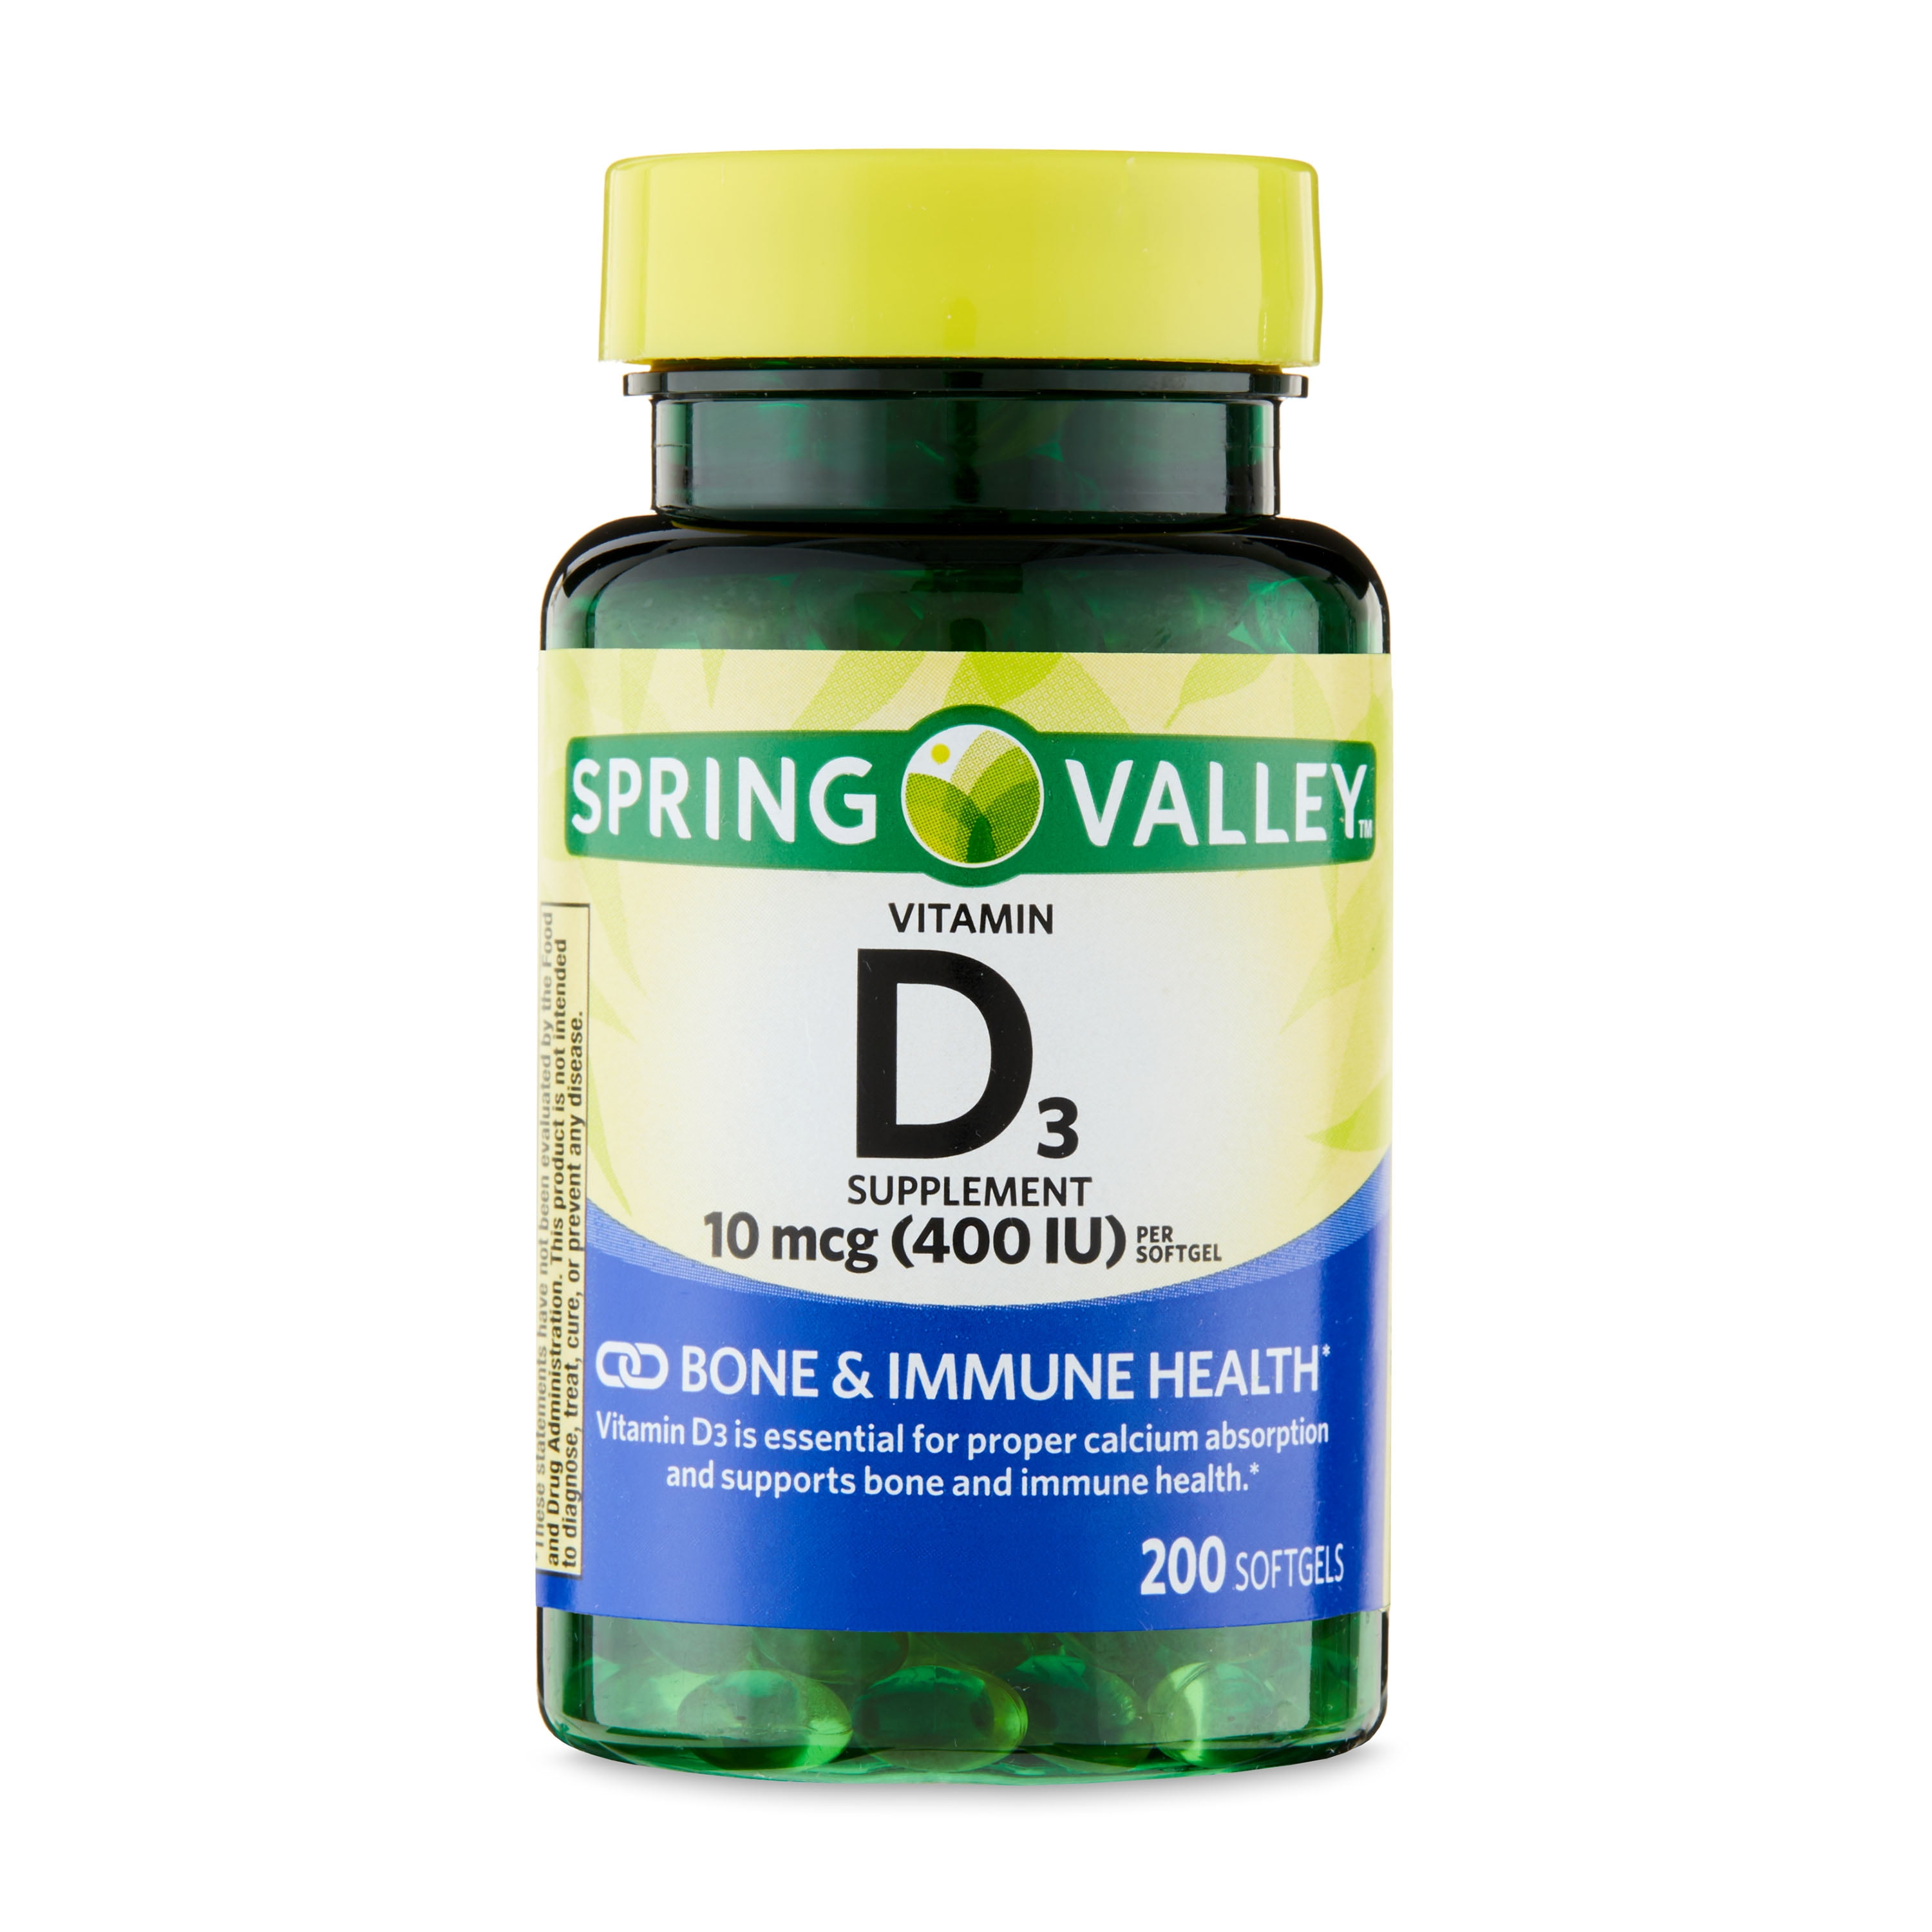 Spring Valley Vitamin D3 Supplement, 10 mcg (400 IU), 200 Softgels ...